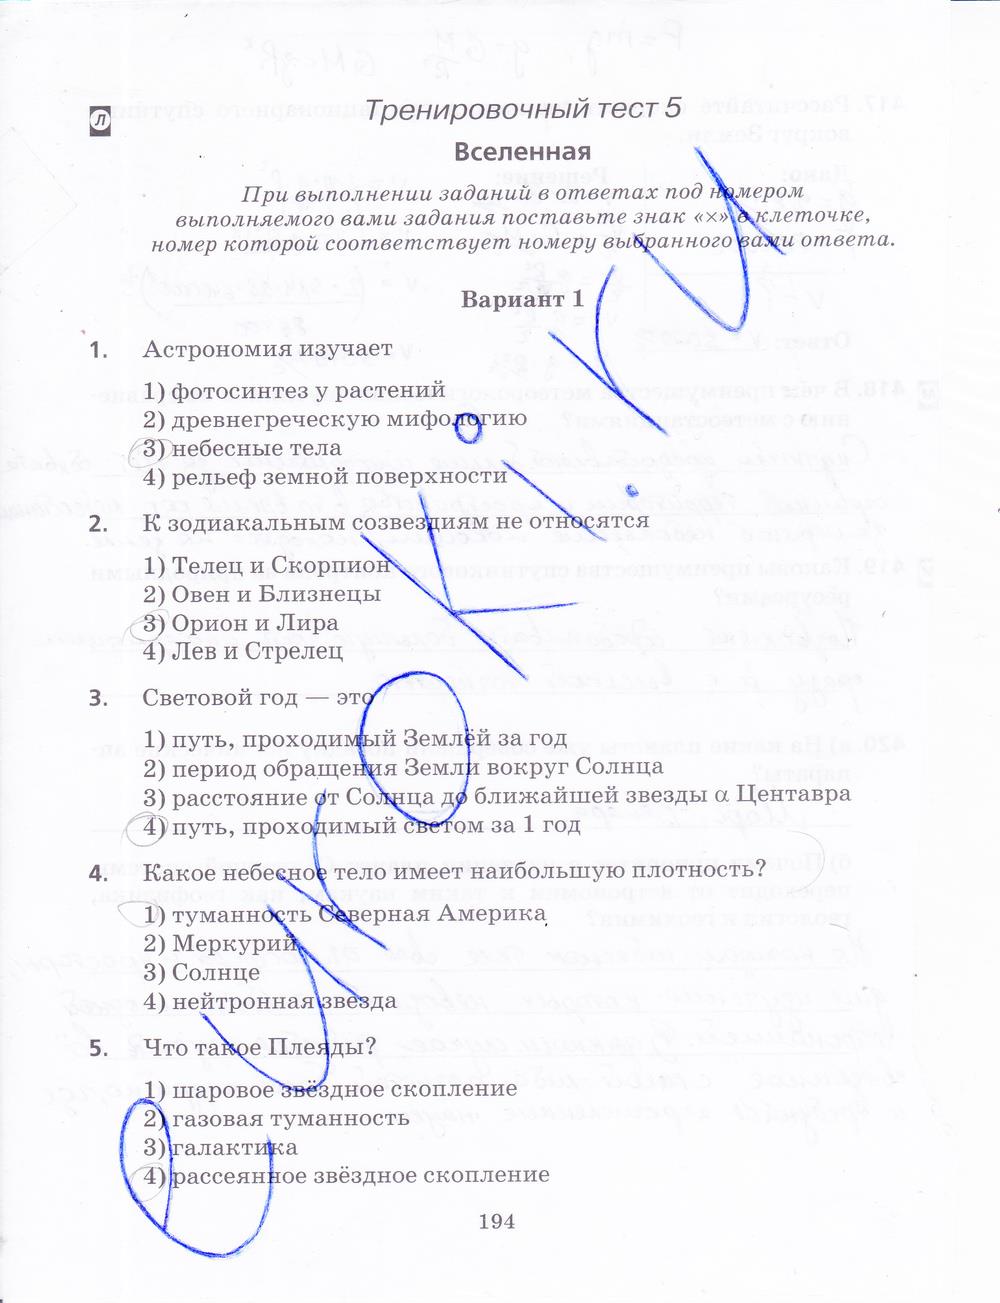 гдз 9 класс рабочая тетрадь страница 194 физика Пурышева, Важеевская, Чаругин